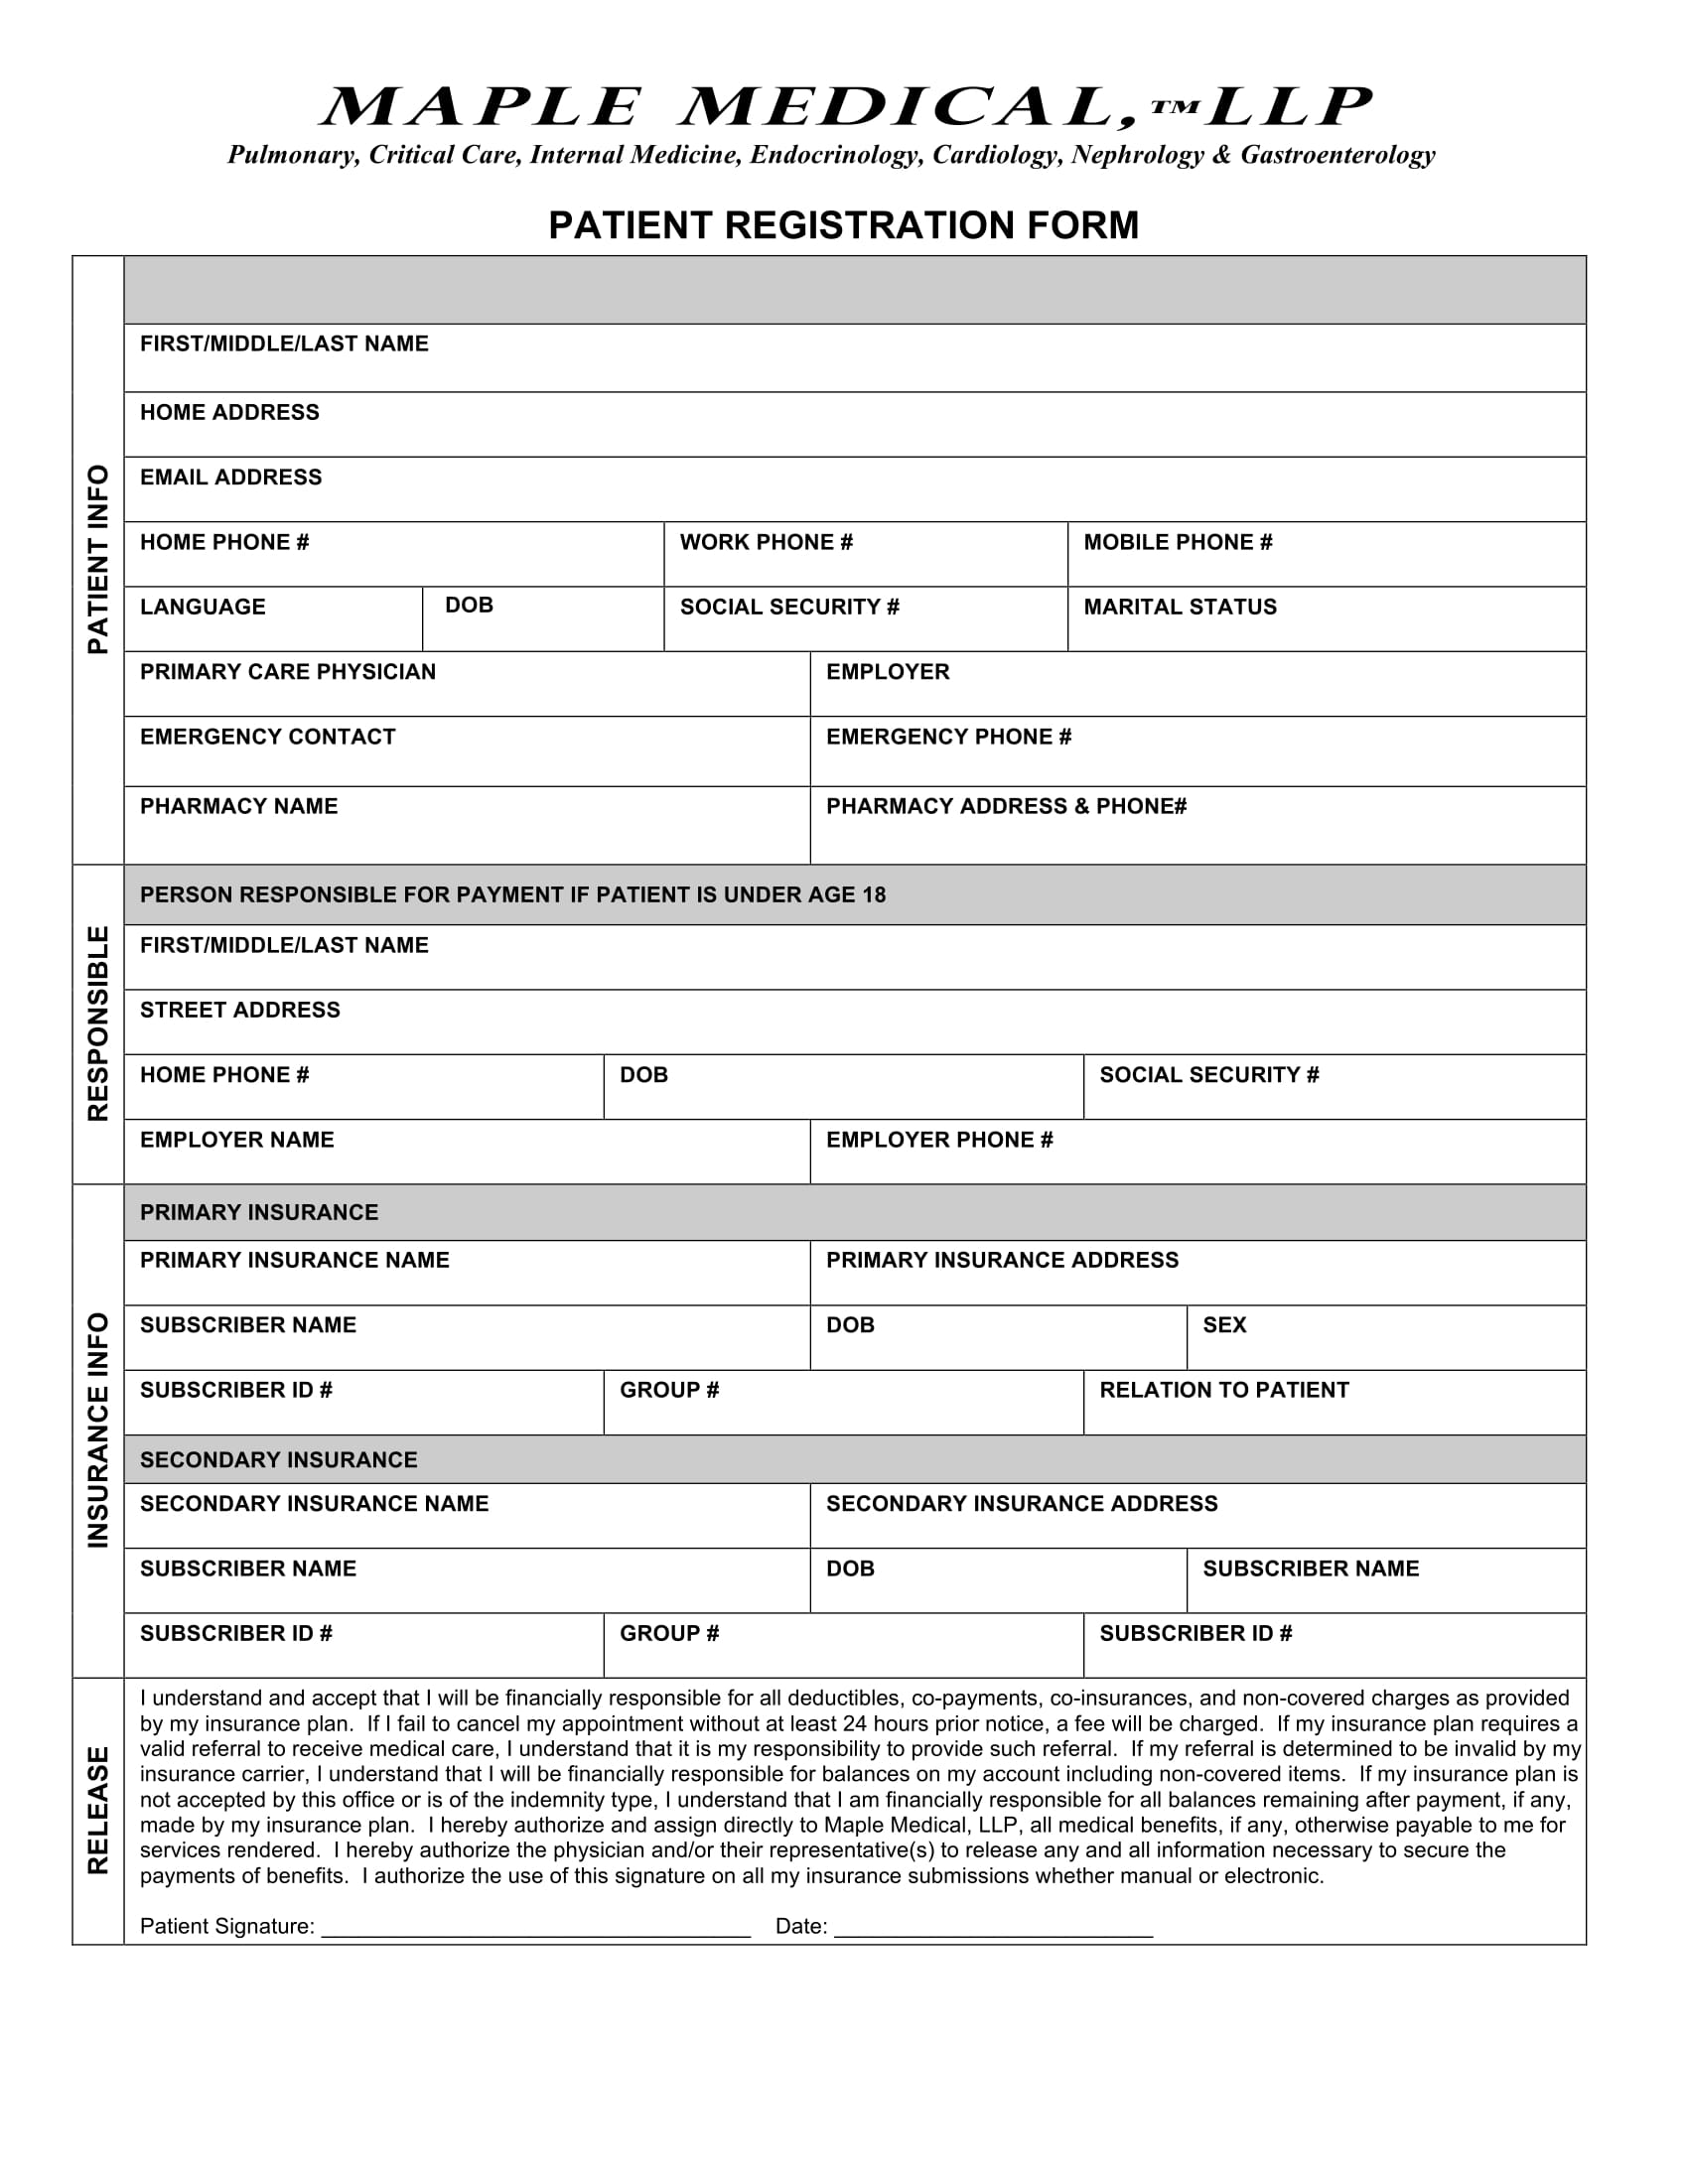 blank patient registration form 1